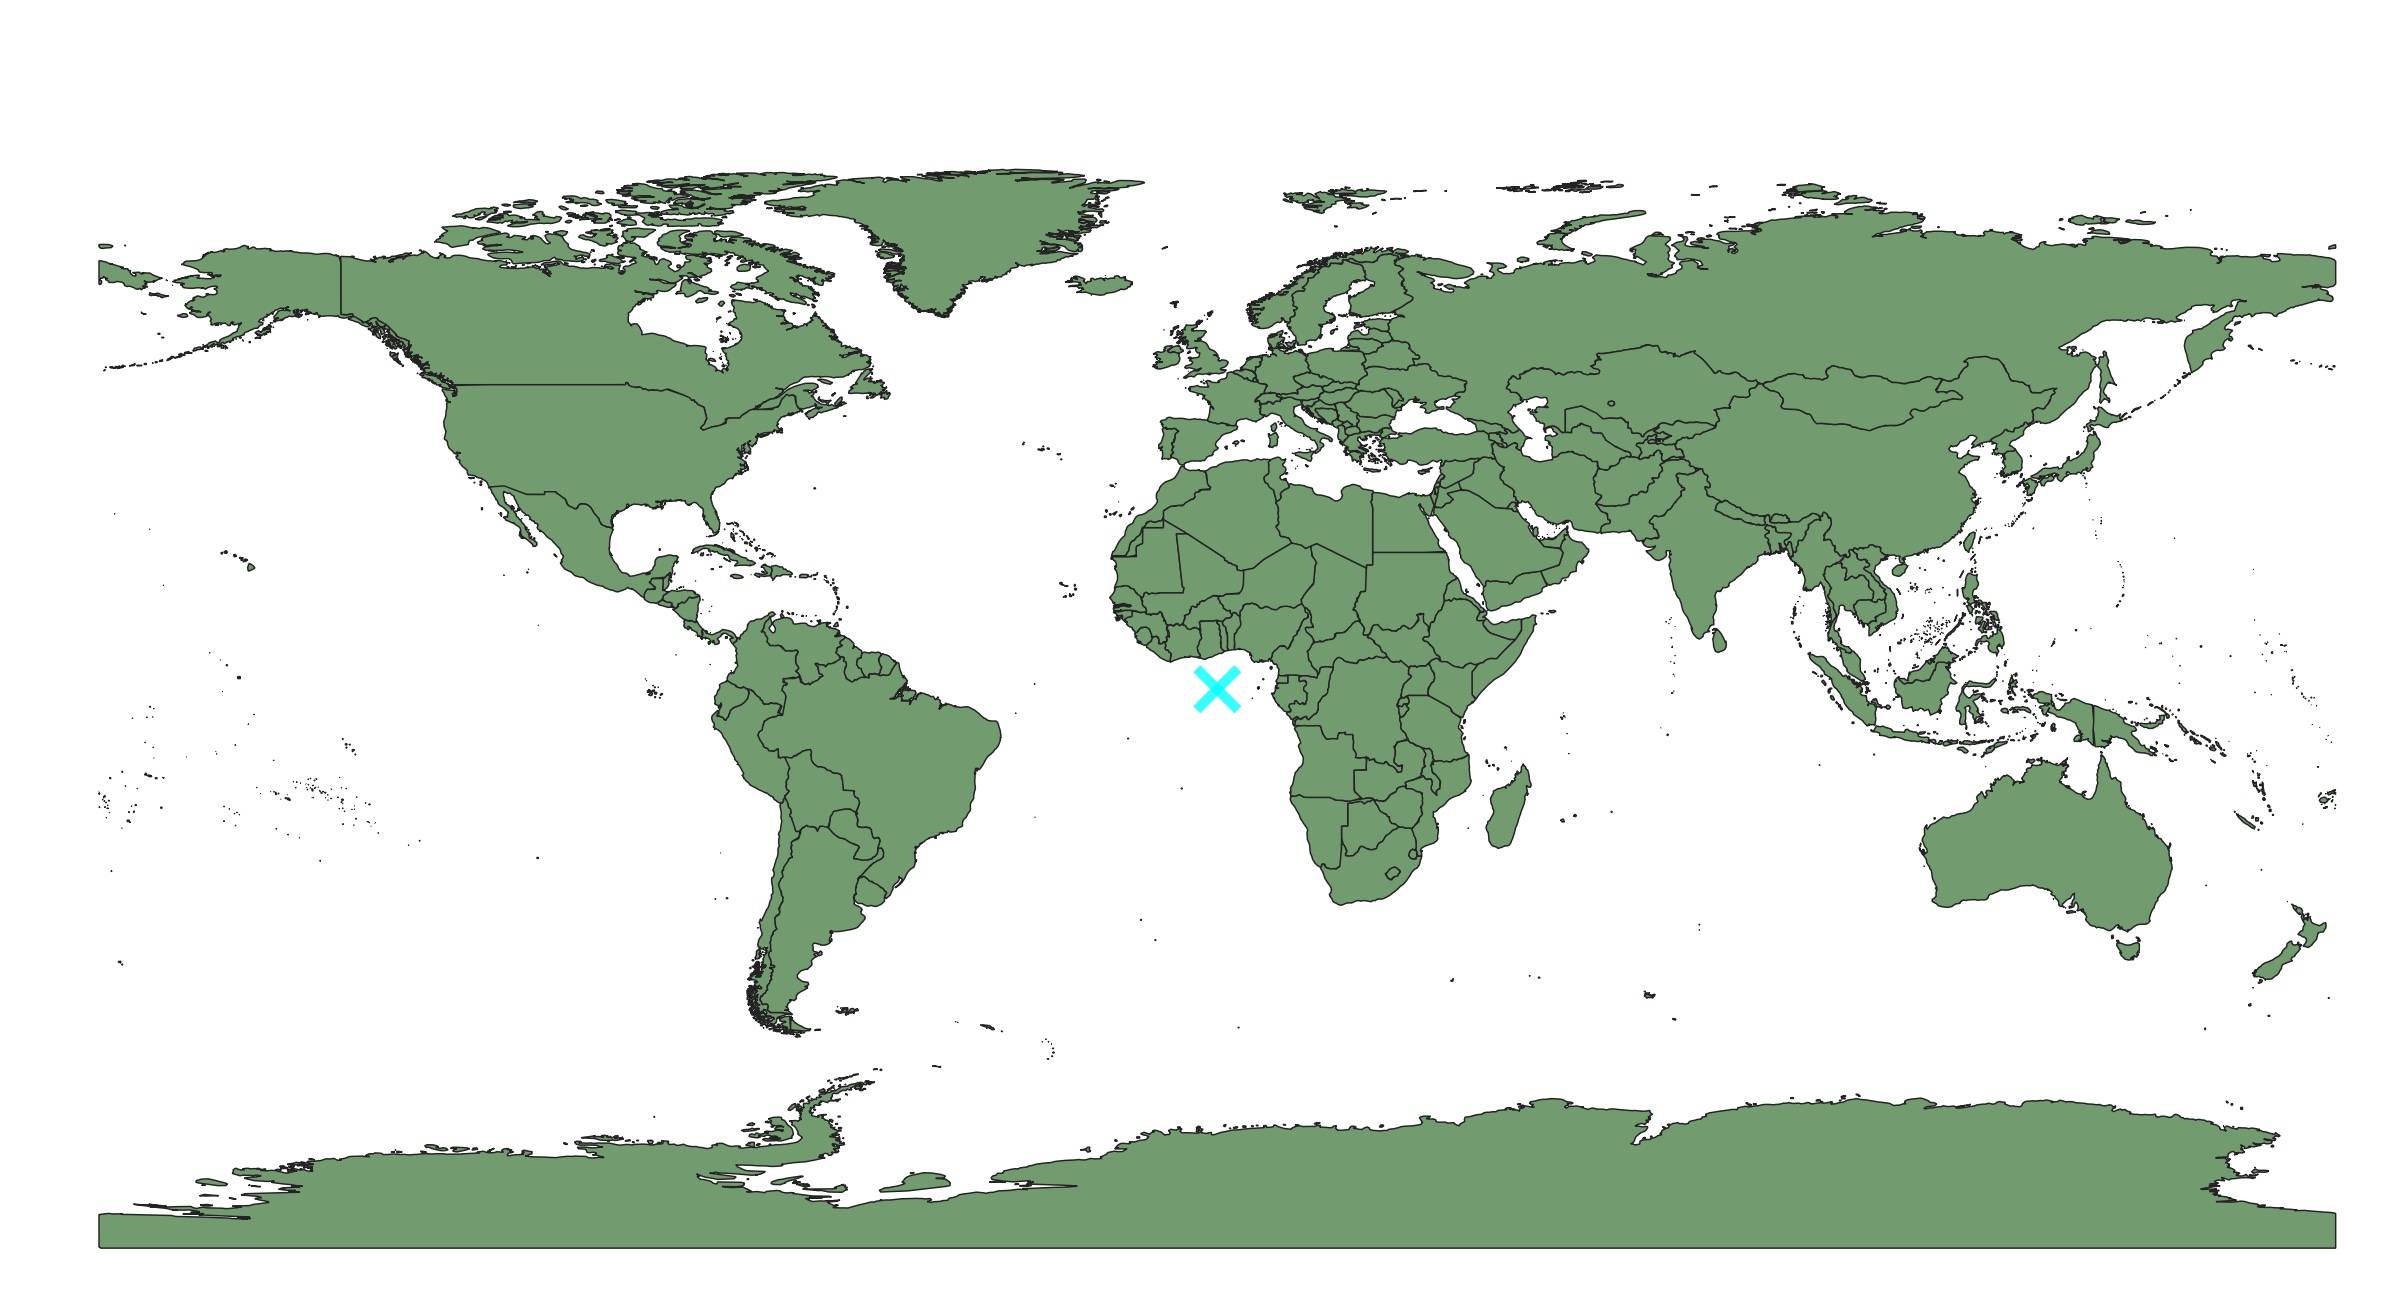 「GIS数据」分享世界地图矢量数据（按国家划分、shp格式）